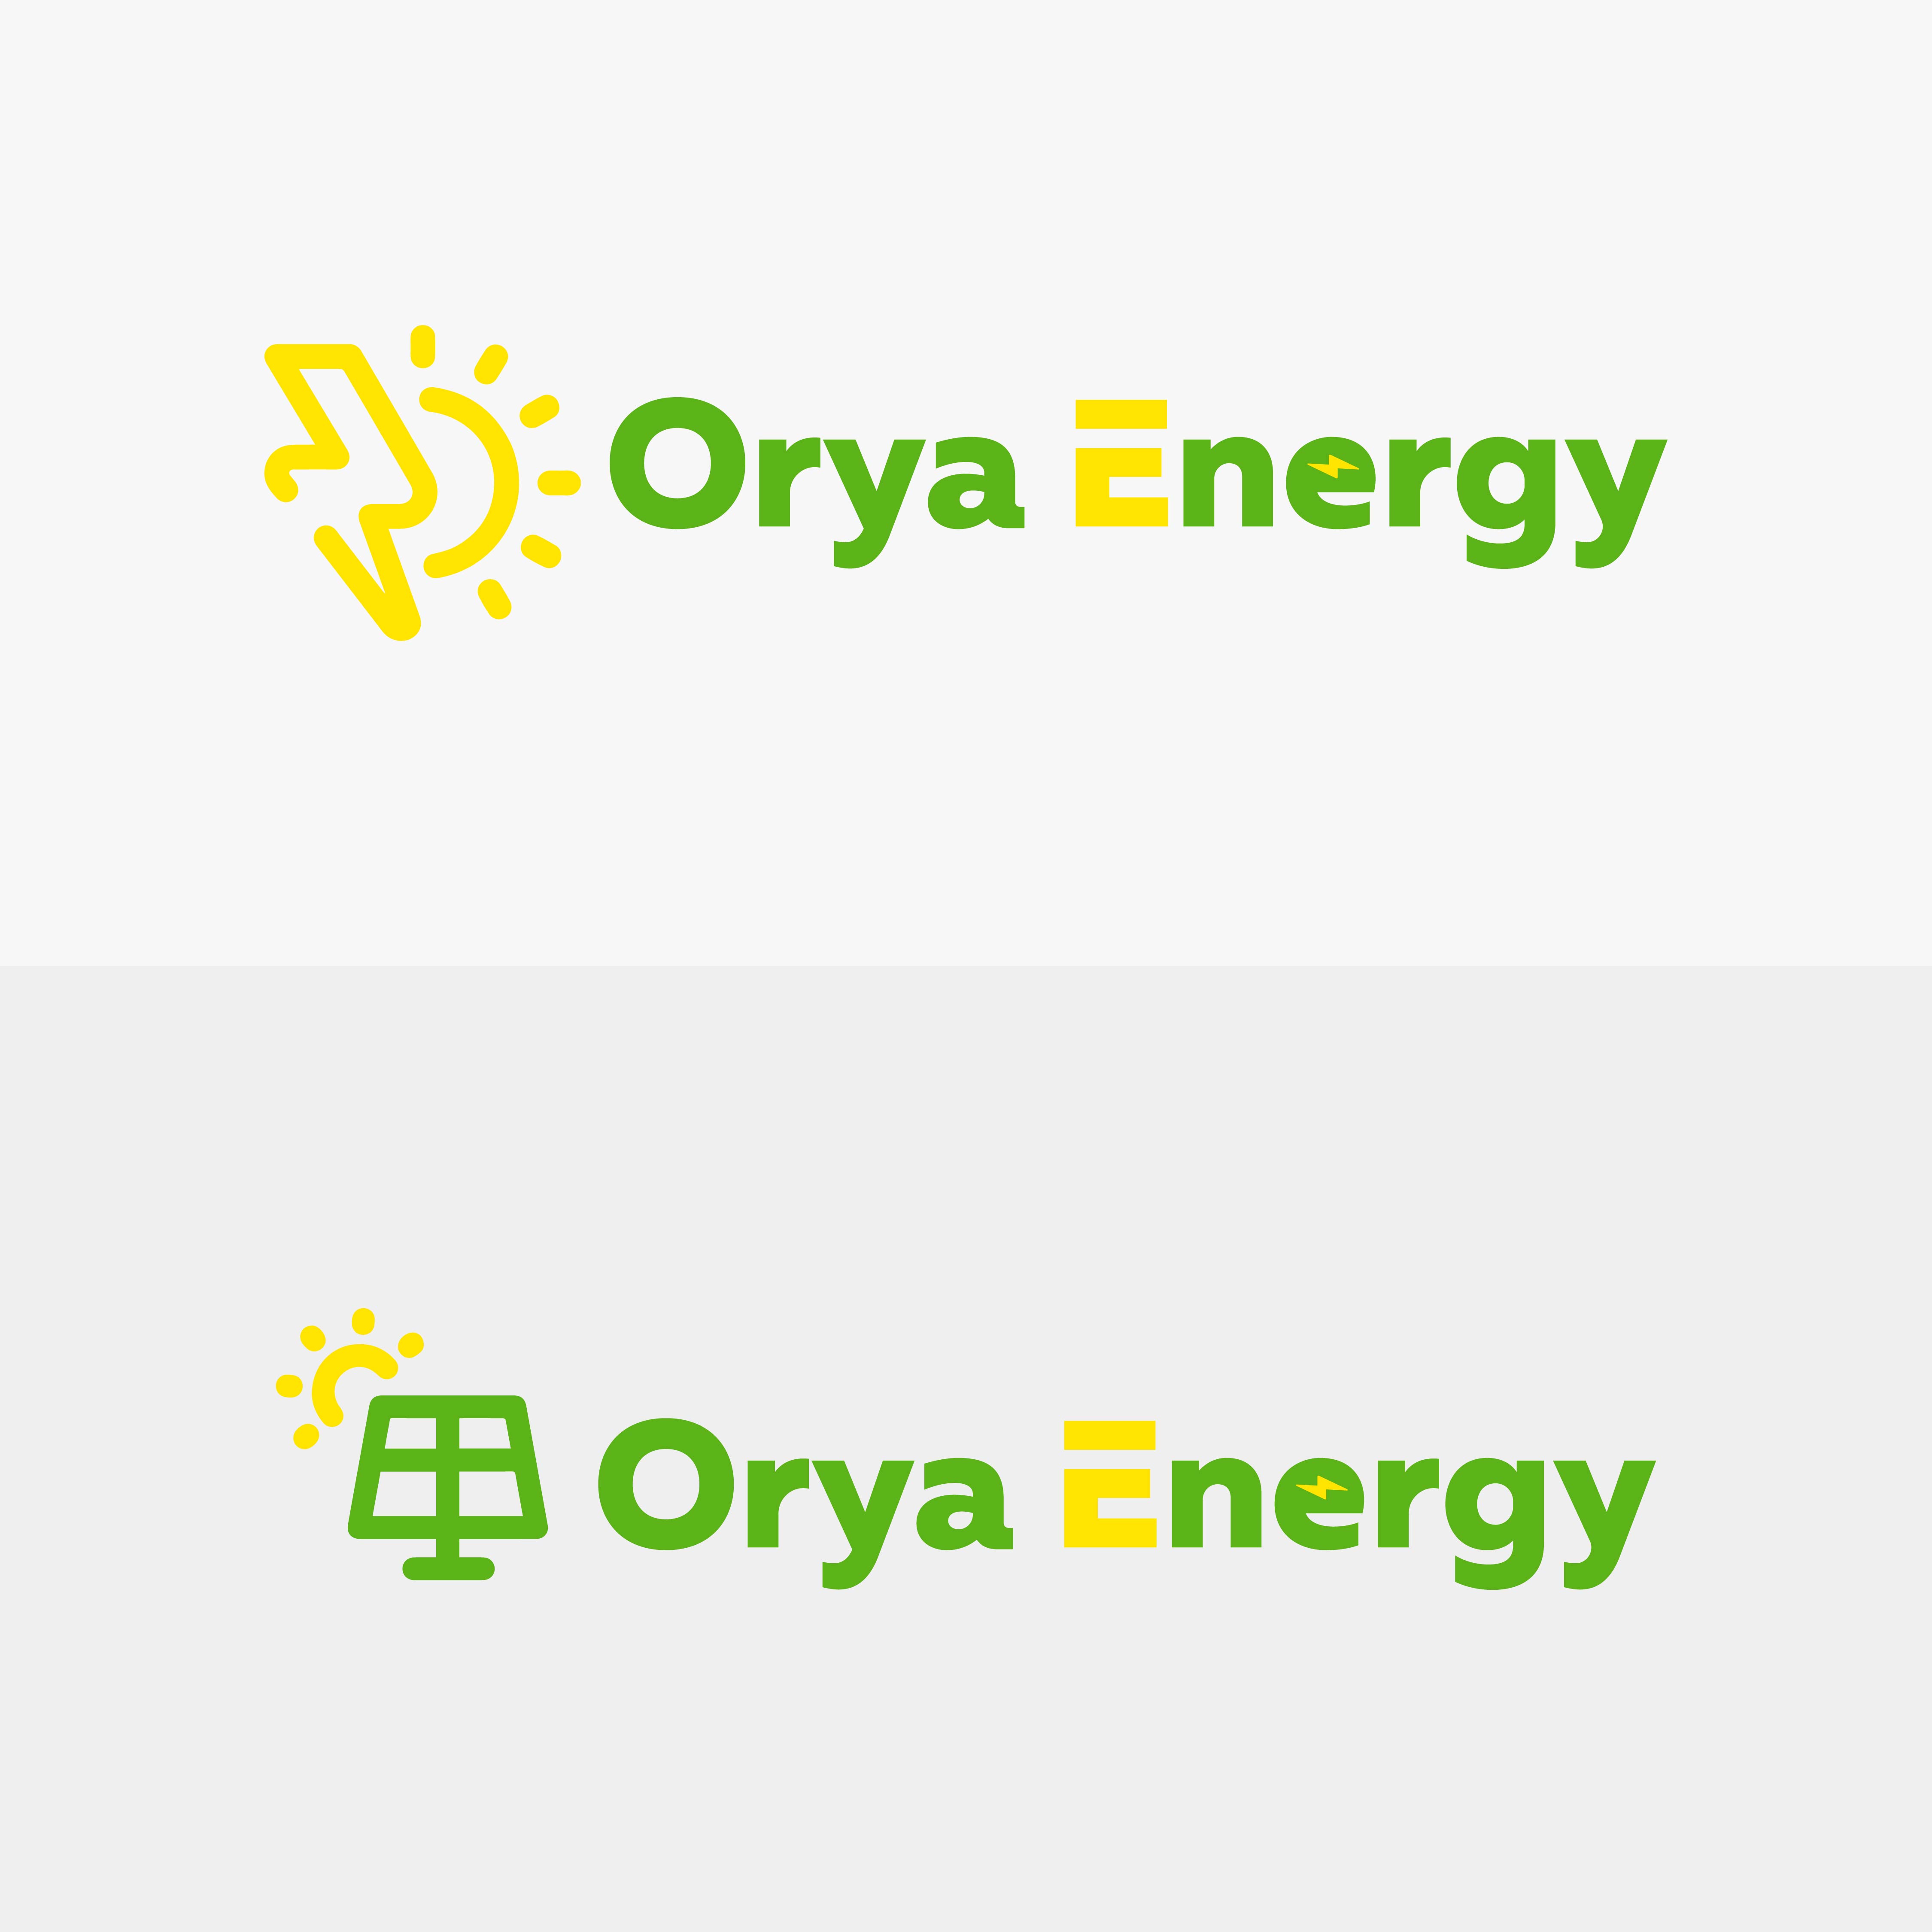 solar energy logo design 01 965